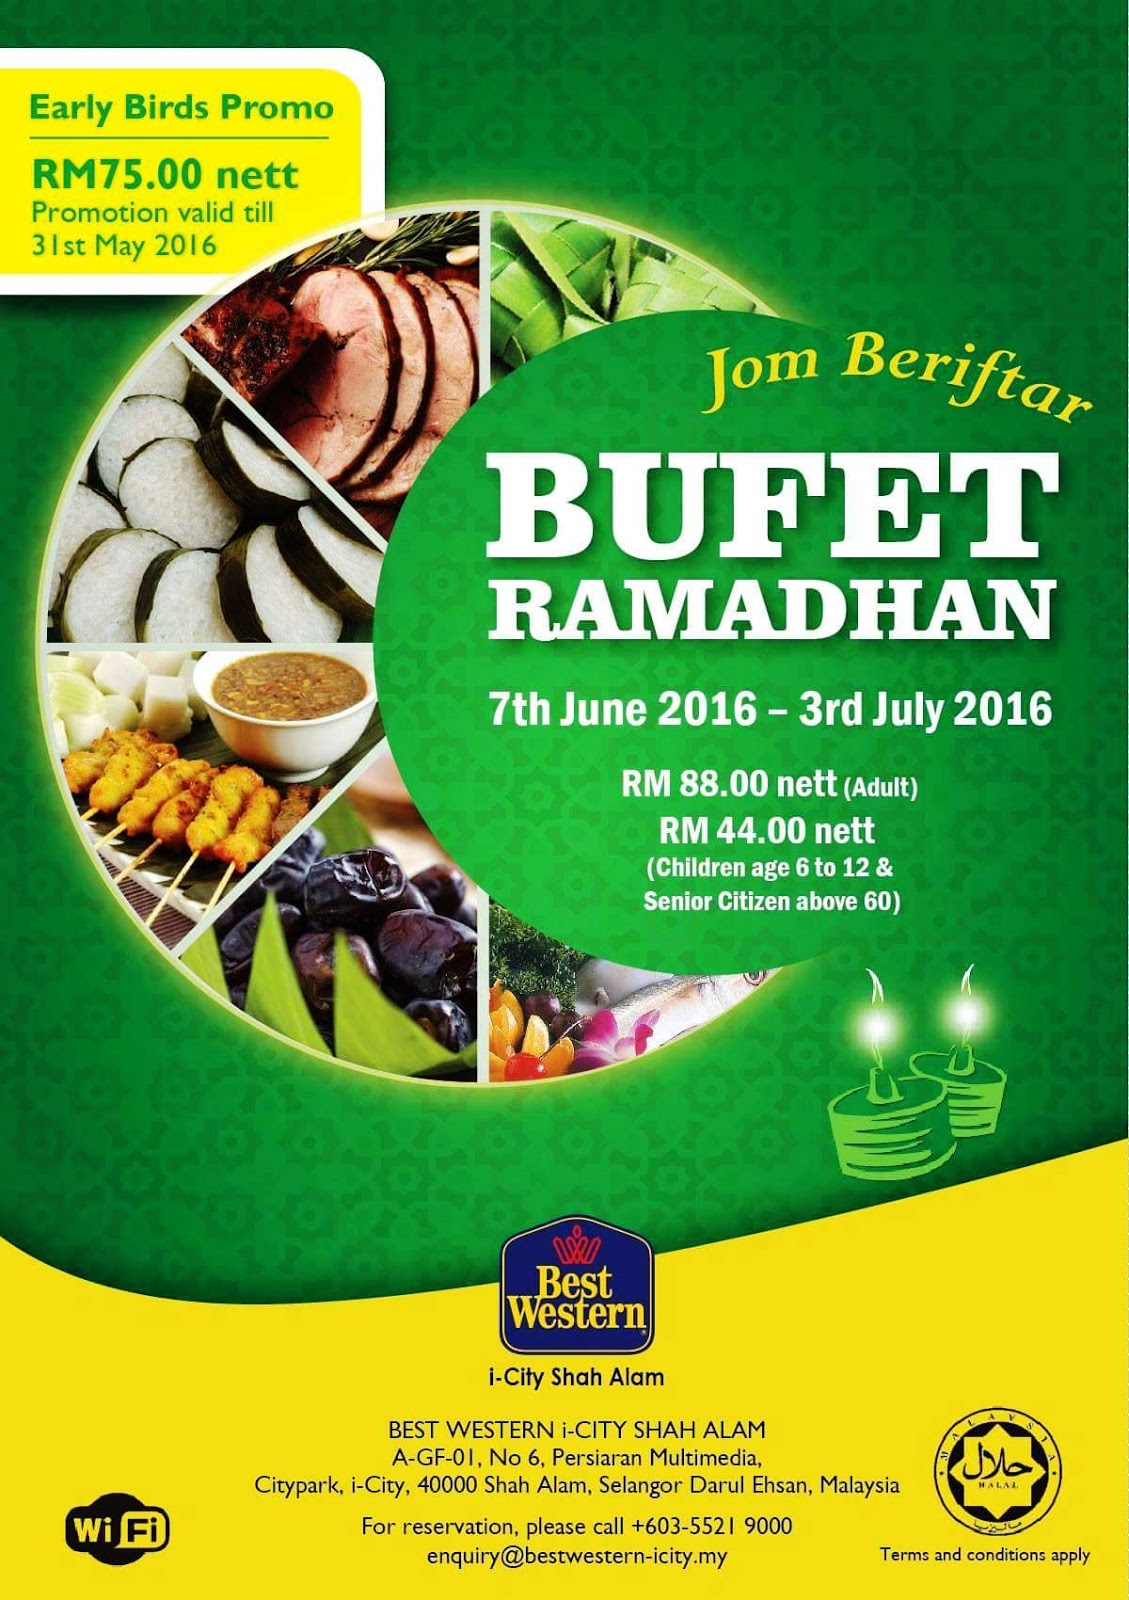 Follow Me To Eat La - Malaysian Food Blog: Ramadhan Buffet 